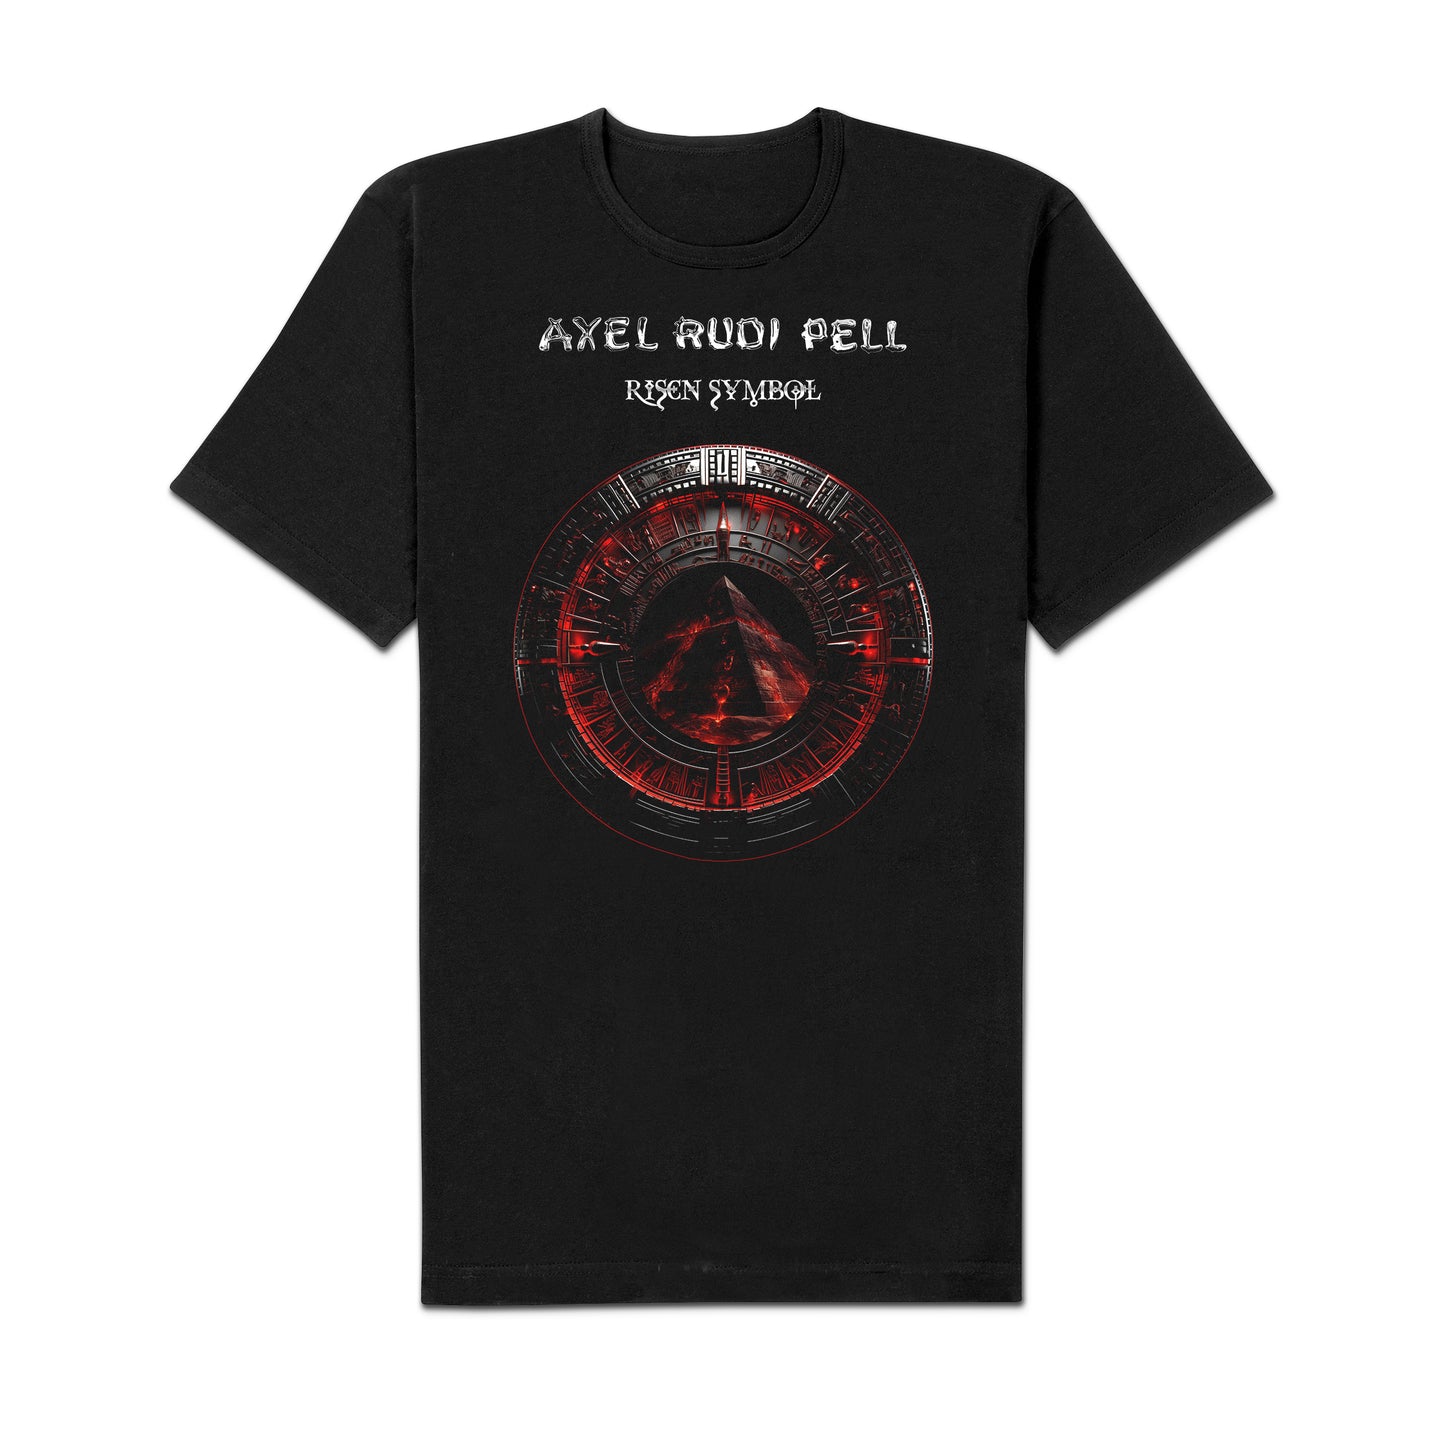 Axel Rudi Pell "Risen Symbol" exclusive LP-Bundle "Symbol"